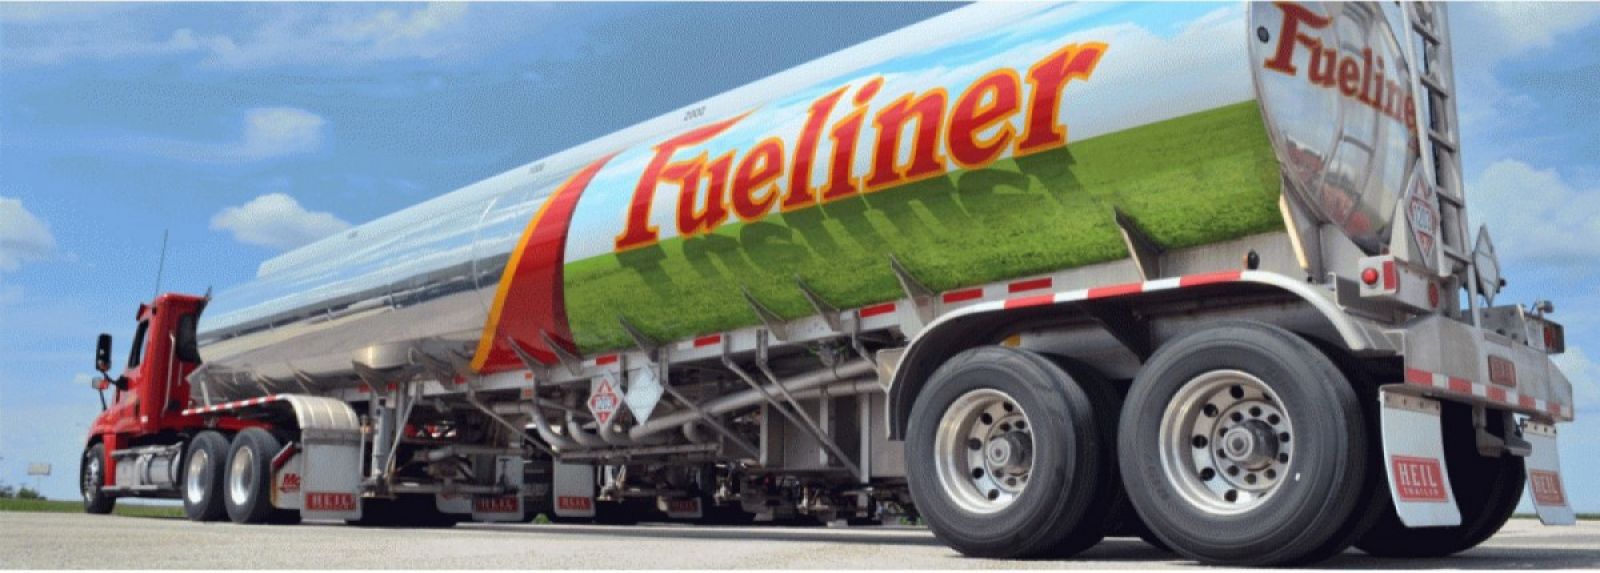 Fueliner  image